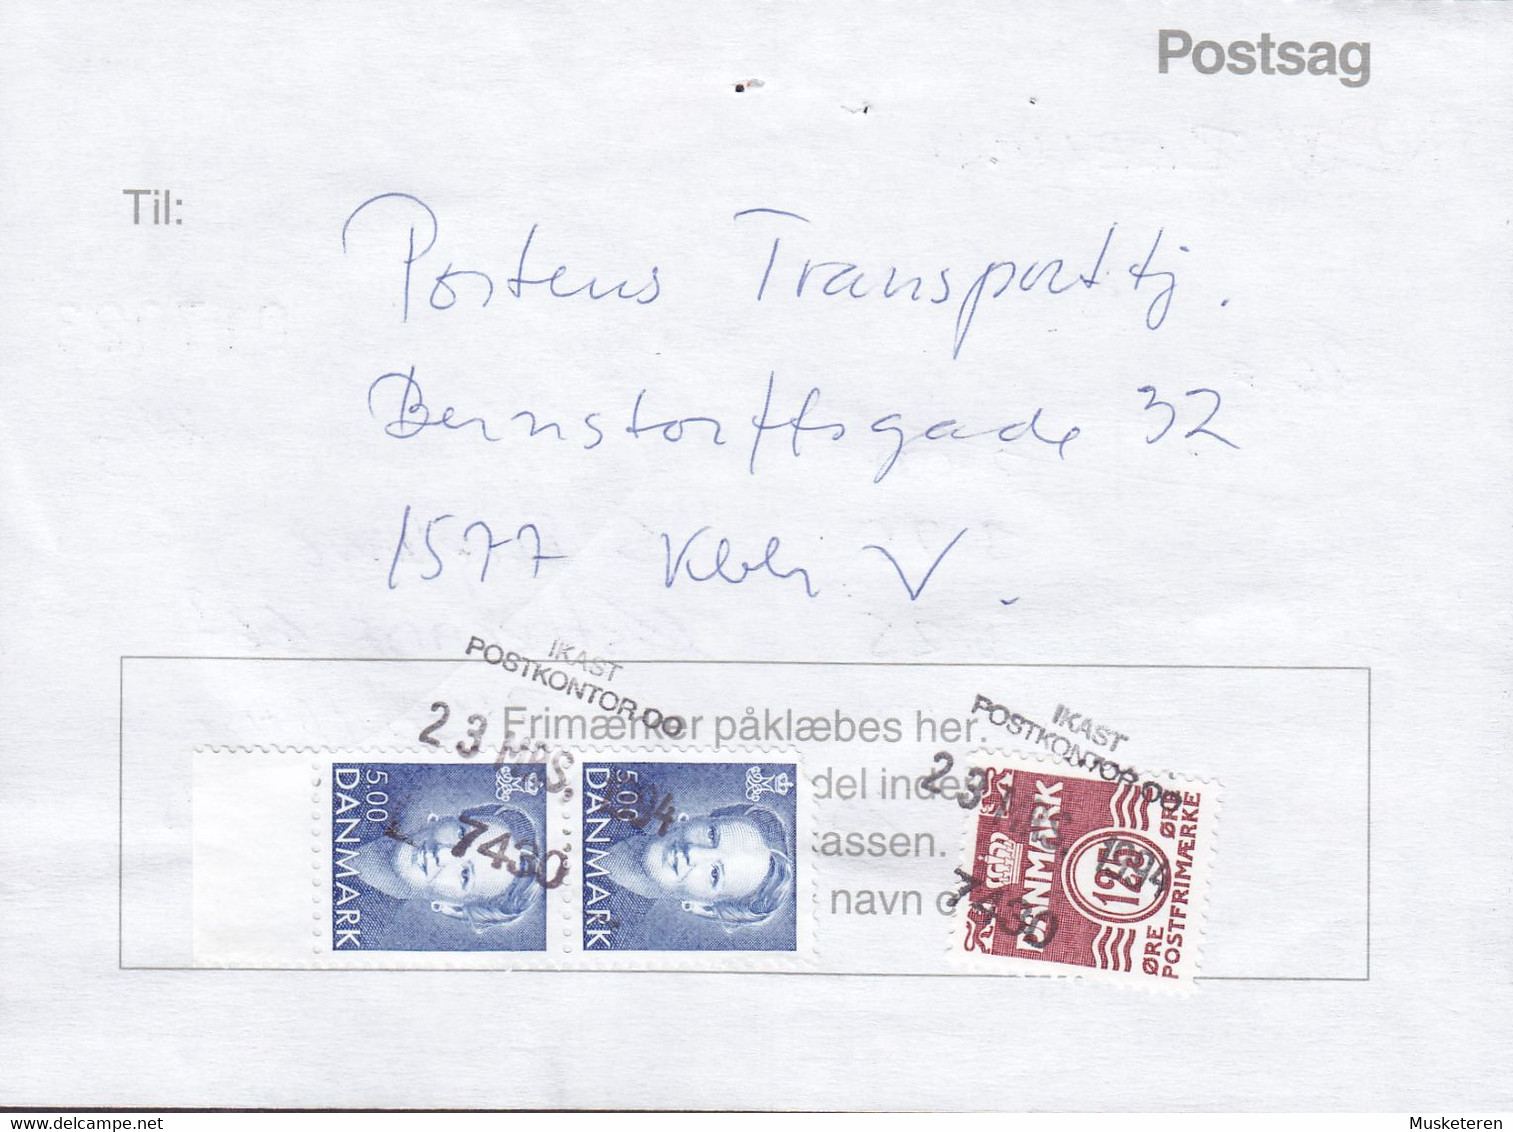 Denmark Regning Manglende Porto Bill TAXE Postage Due New Zealand Line Cds. IKAST POSTKONTOR 1994 Postsag Cz. Slania - Covers & Documents